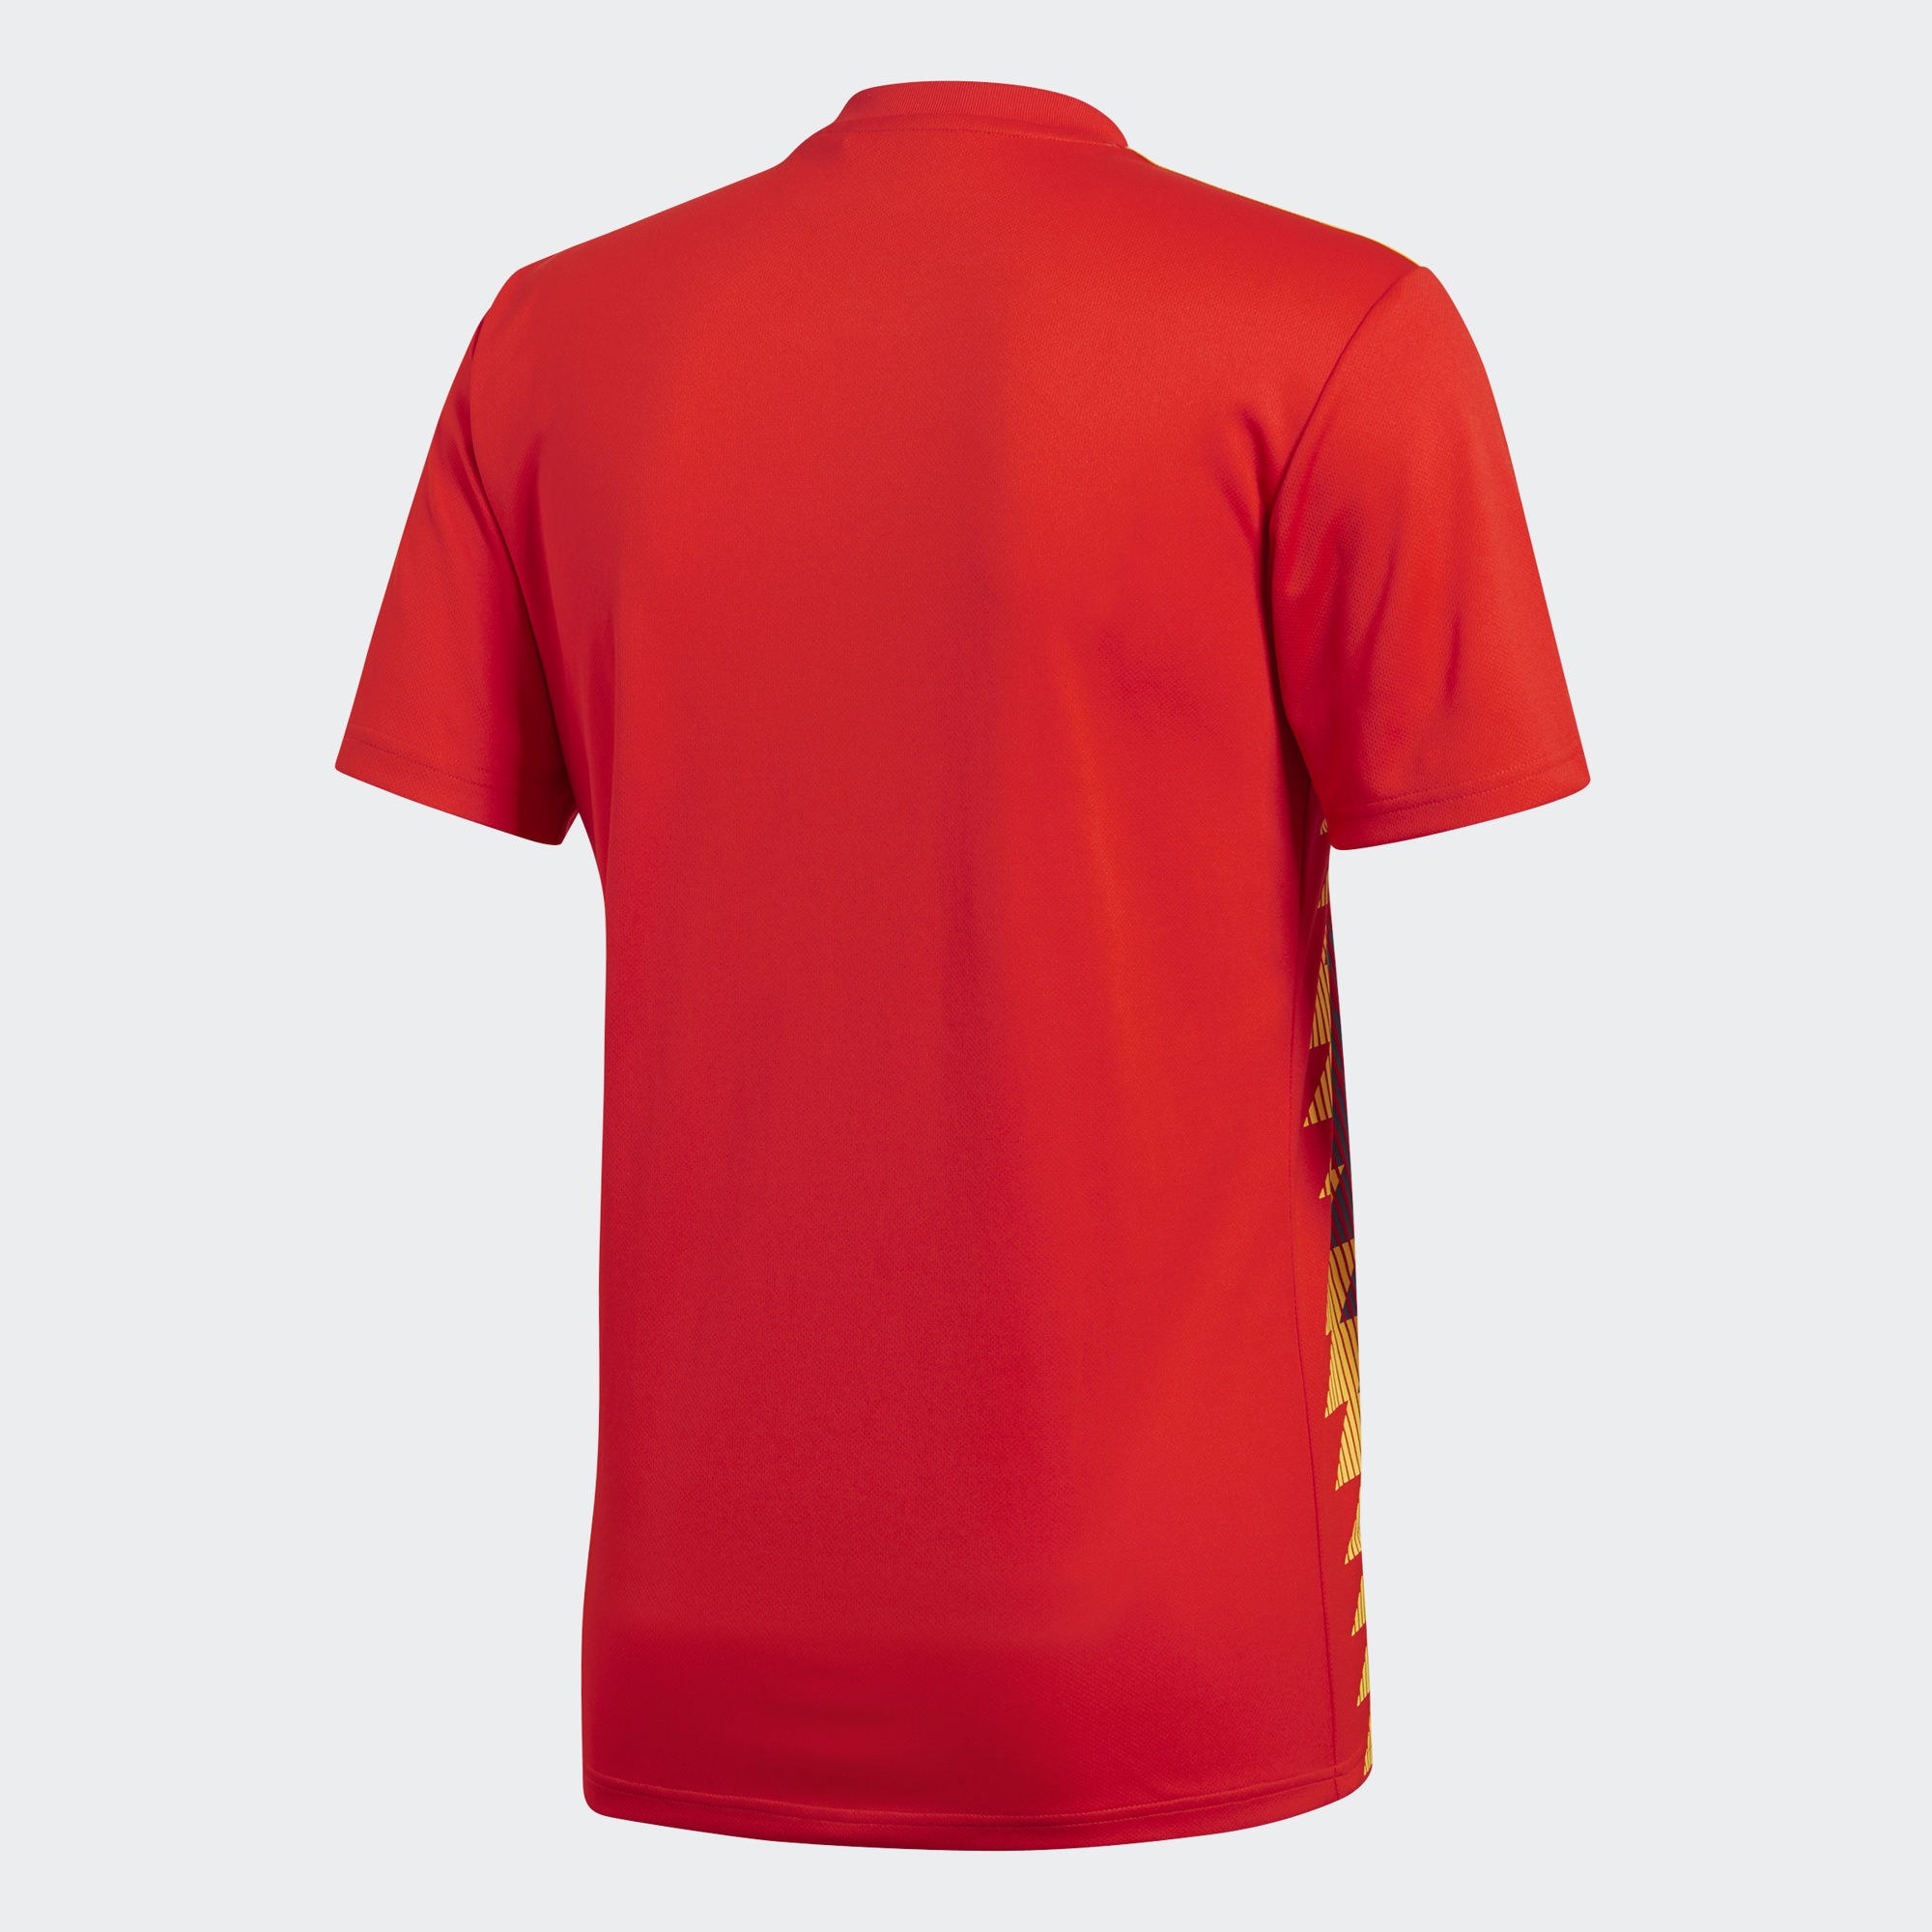 Spain 2018 World Cup Adidas Home Kit | 17/18 Kits | Football shirt blog